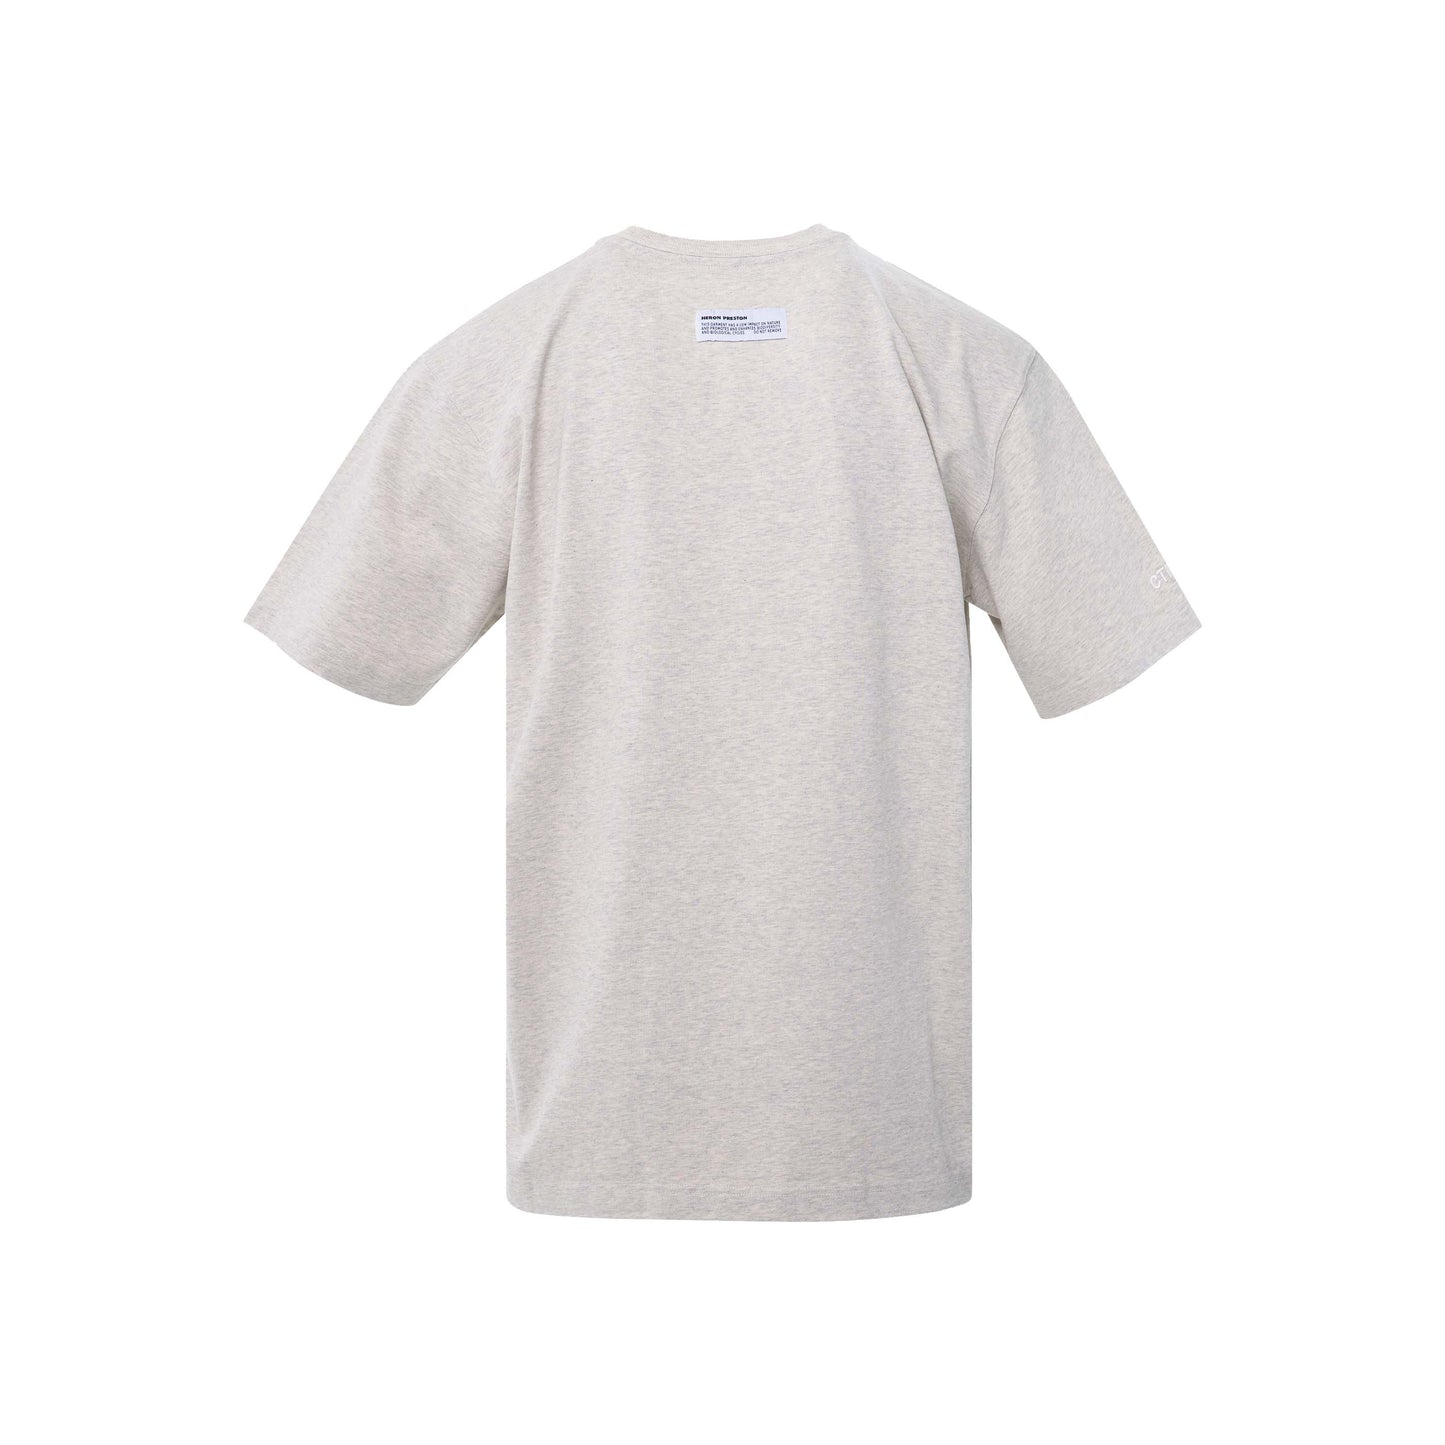 Censored Heron Oversize T-Shirt in Grey